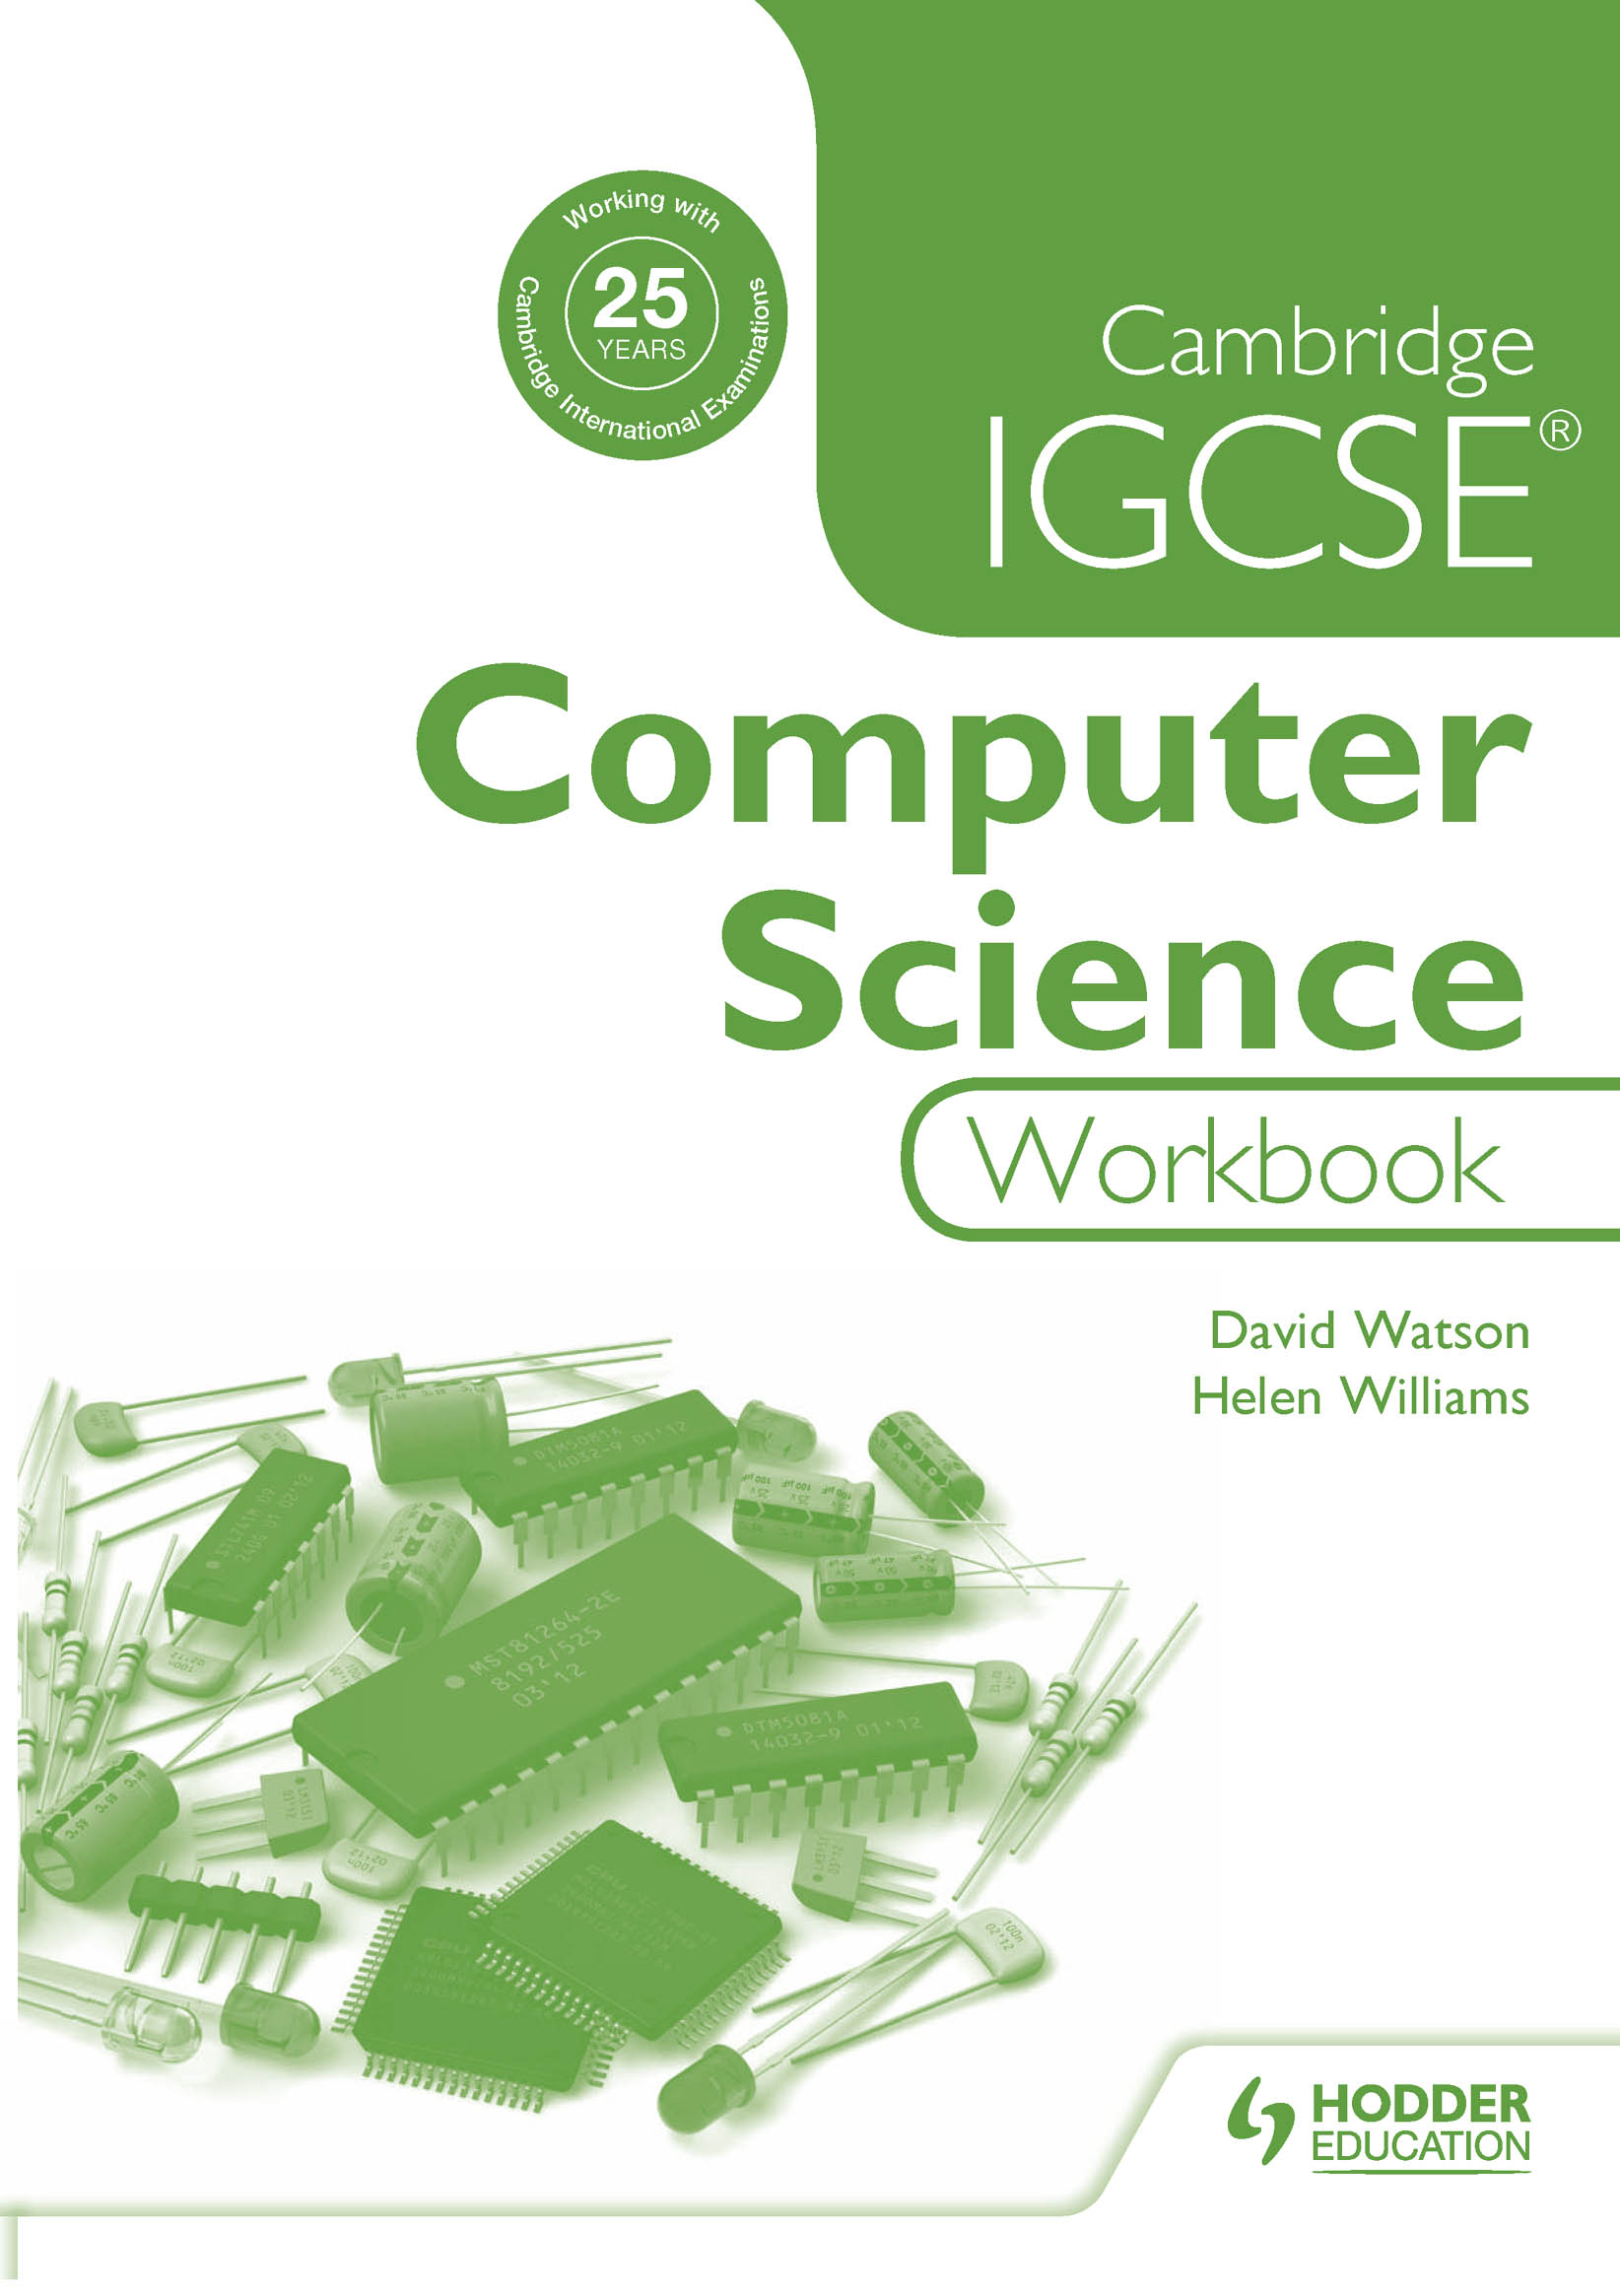 Cambridge IGCSE Computer Science Workbook